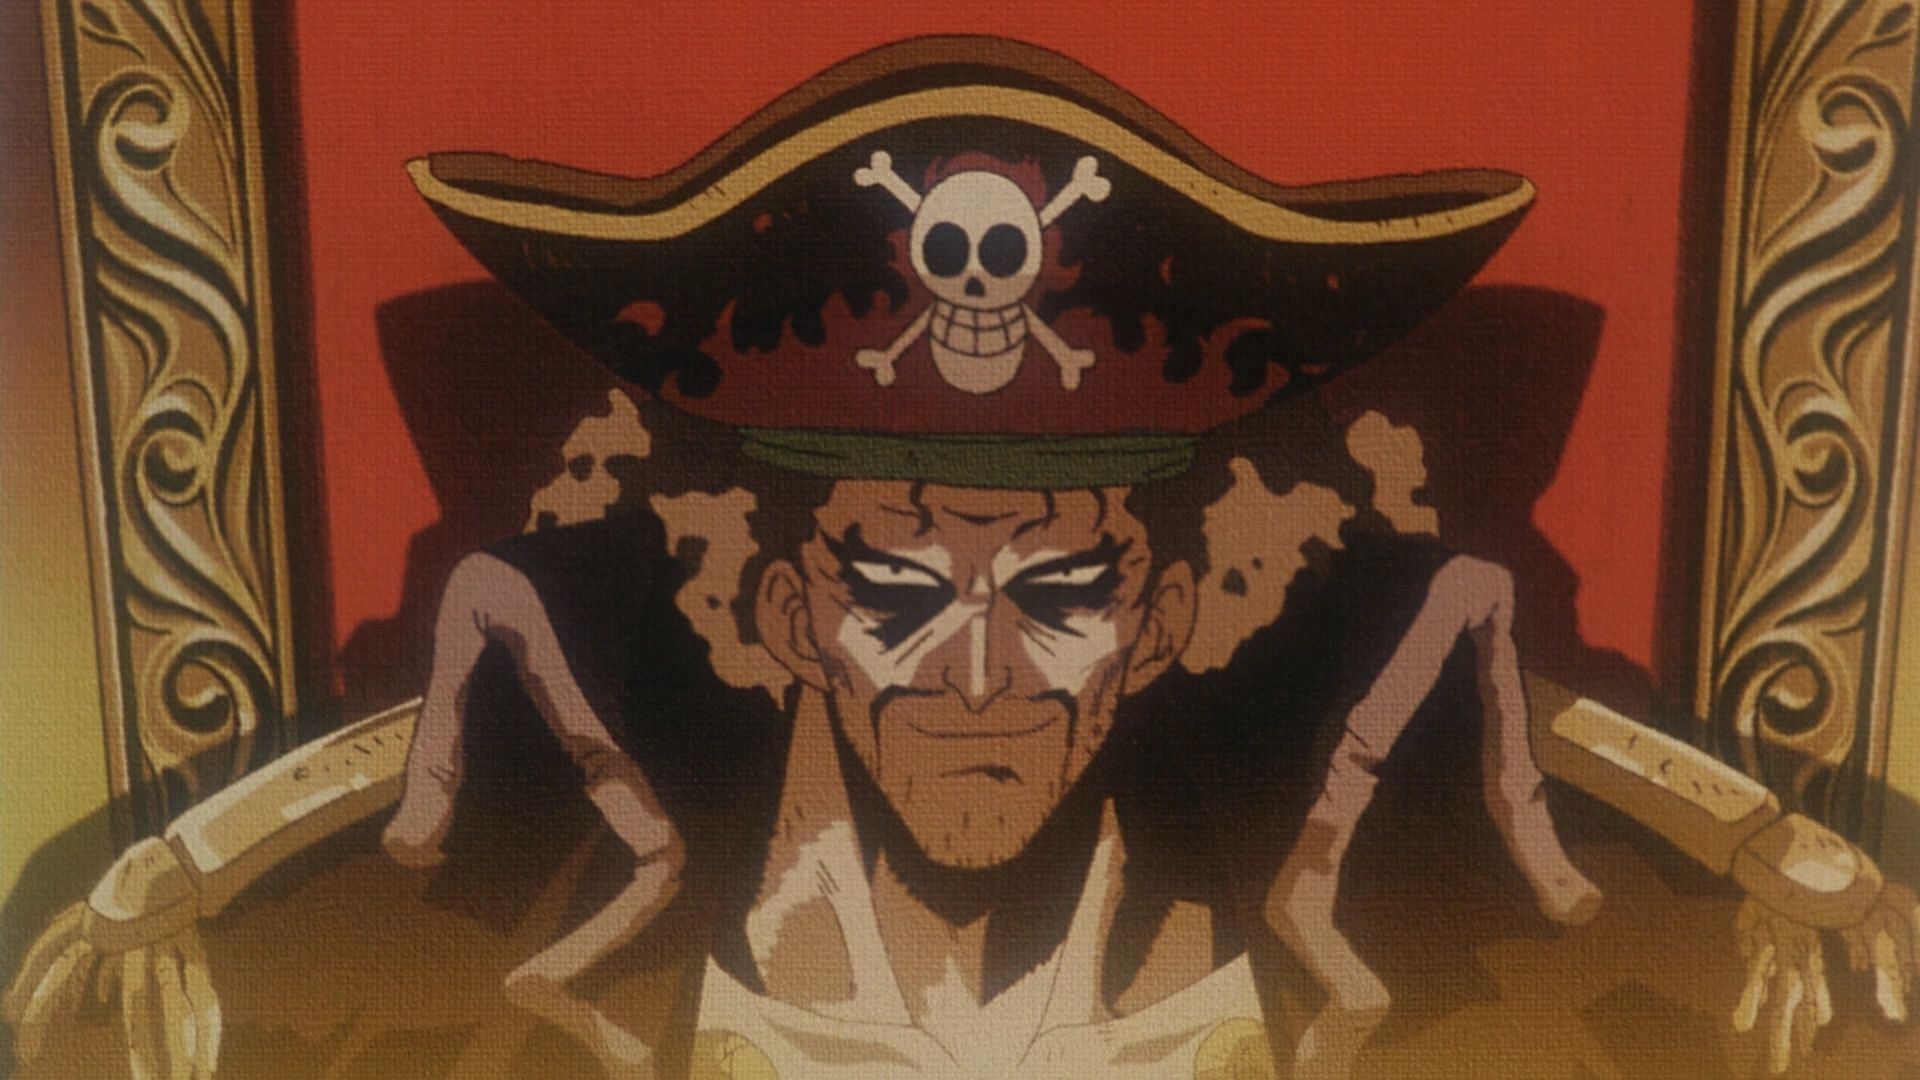 The famous Captain Woonan (Image via Toei Animation, One Piece)